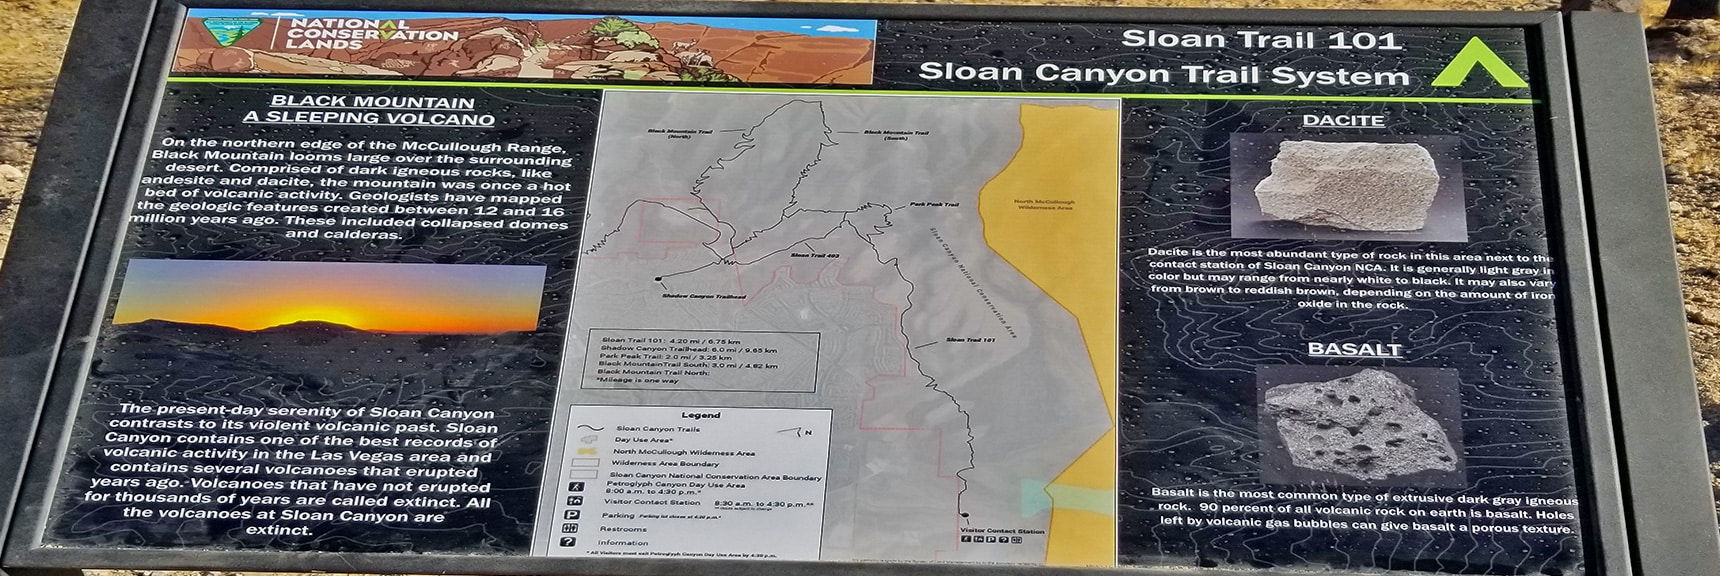 McCullough Hills Vulcanic Area Interpretive Sign | Petroglyph Canyon | Sloan Canyon National Conservation Area, Nevada